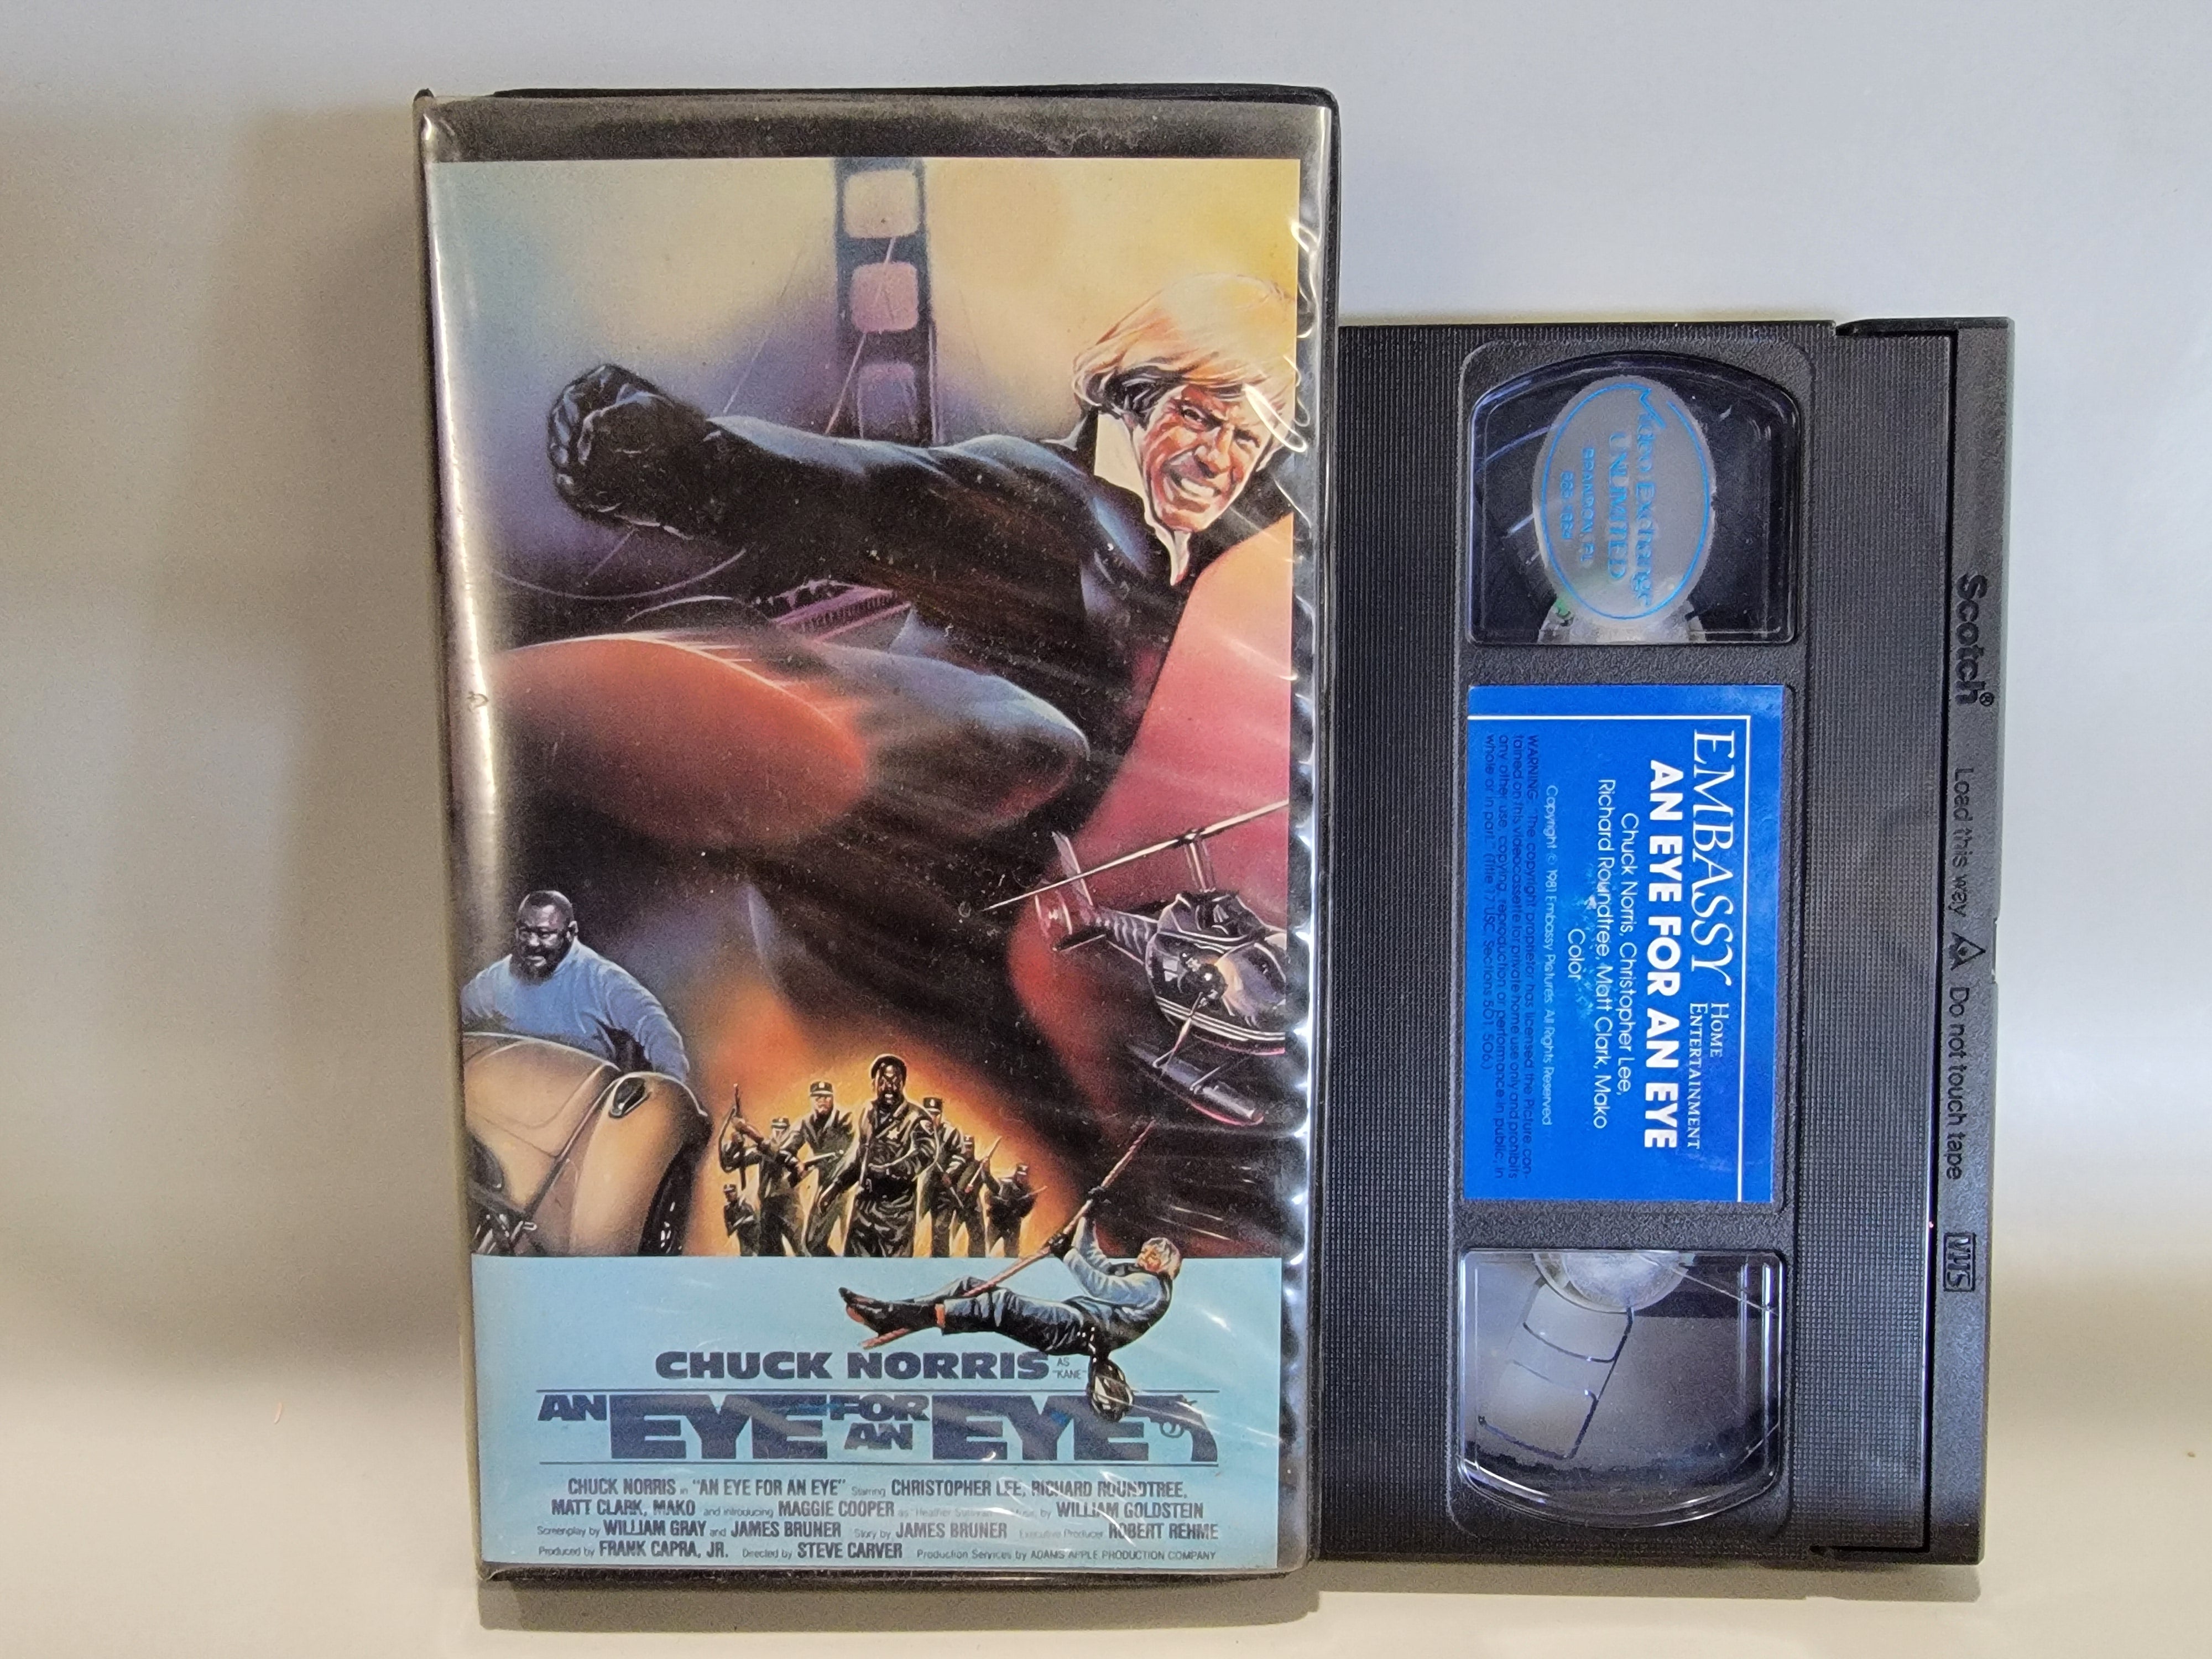 AN EYE FOR AN EYE VHS [USED]